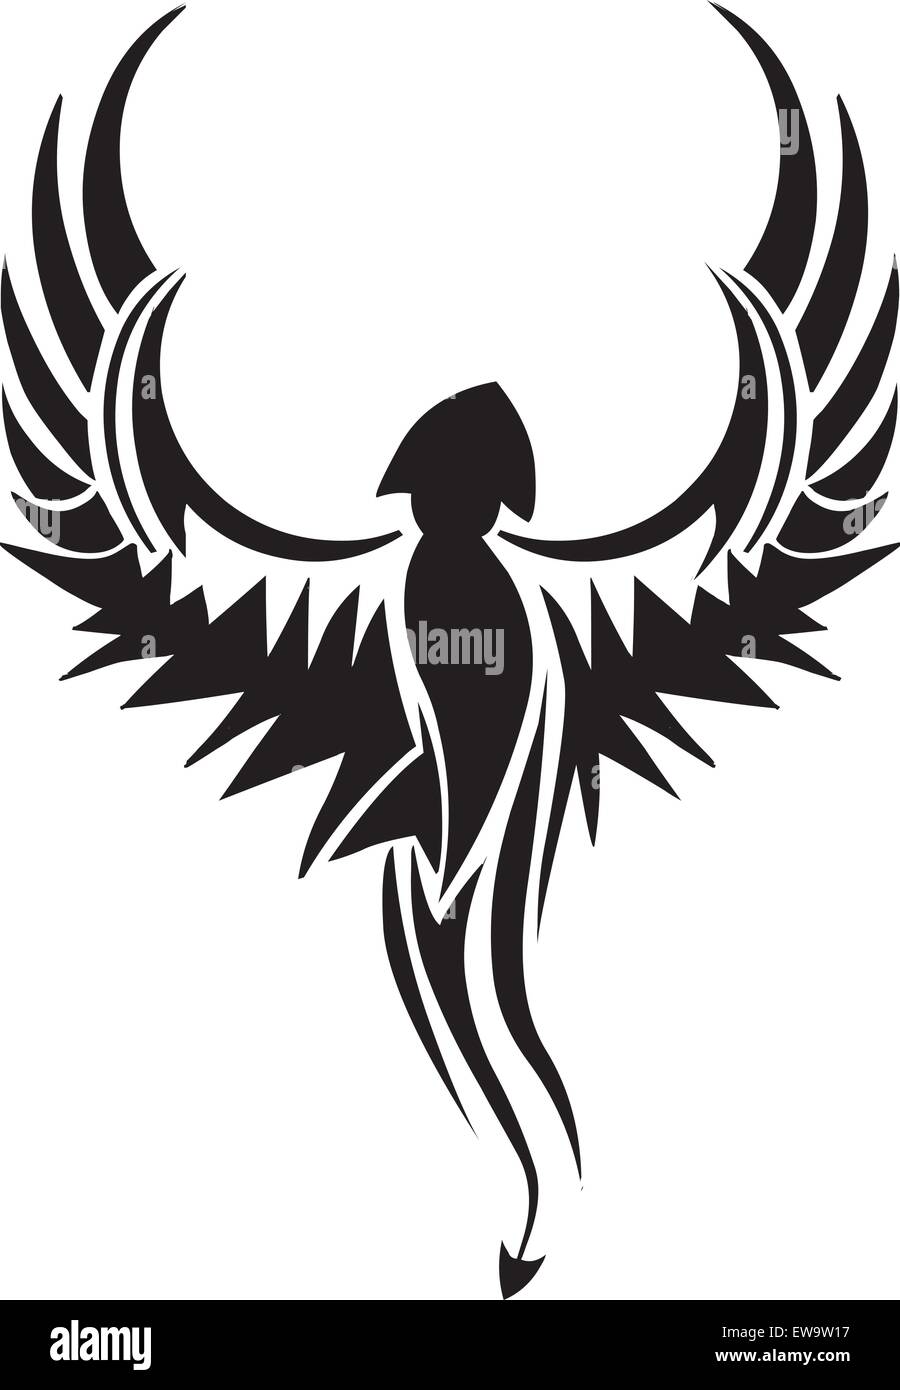 Tattoo design of flying bird, vintage engraved illustration Stock Vector  Image & Art - Alamy